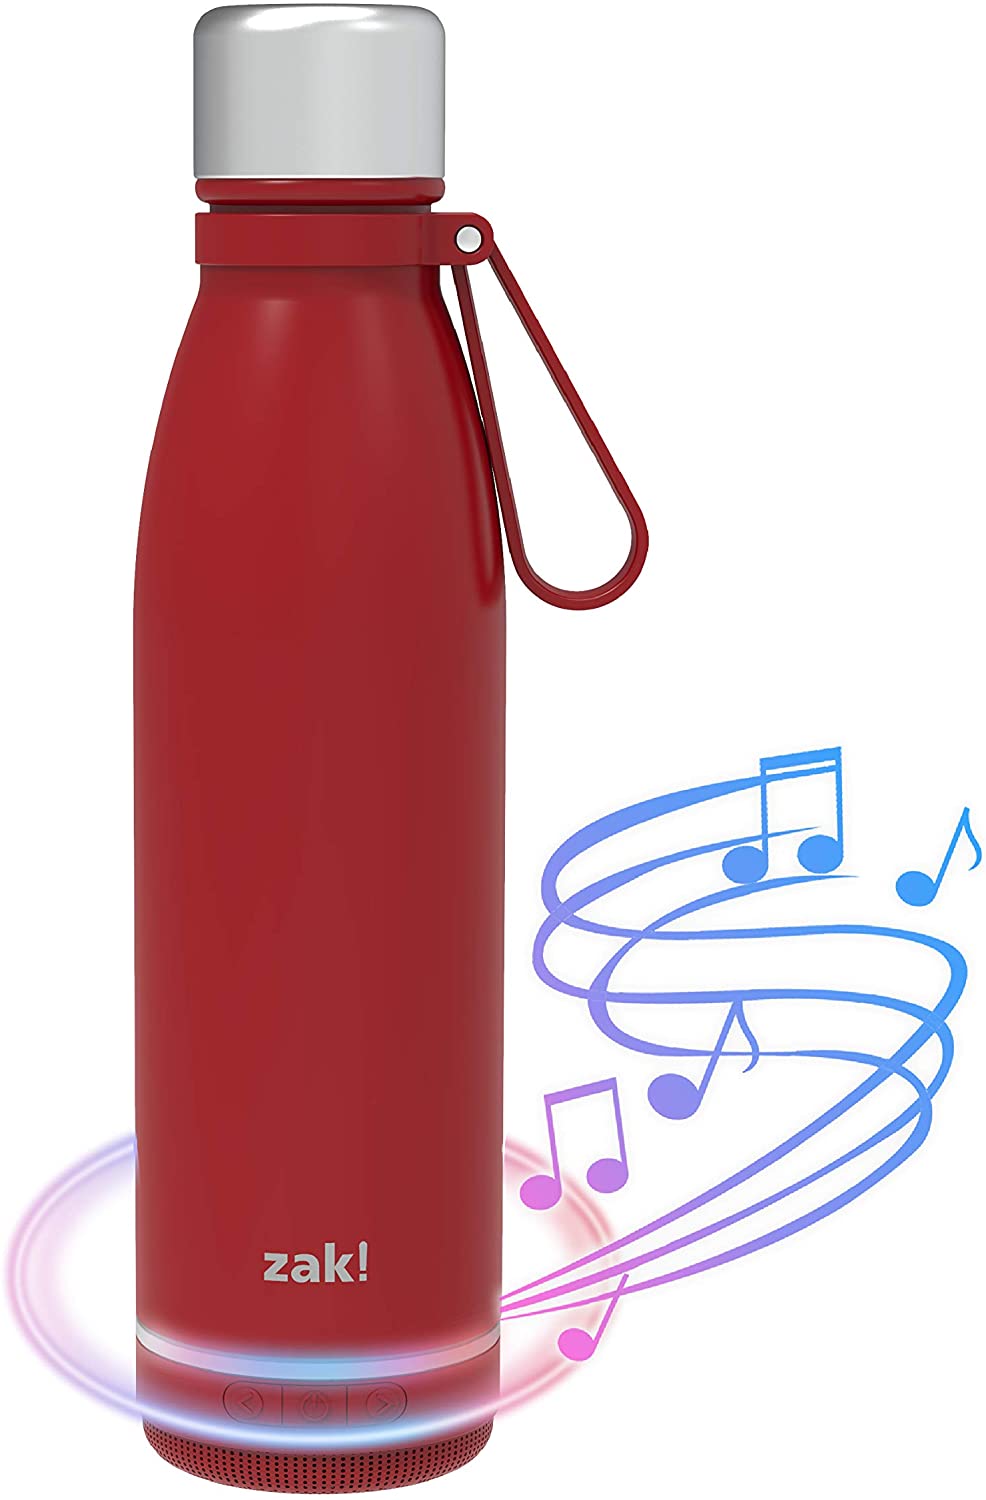 Water Bottle with Bluetooth Speaker